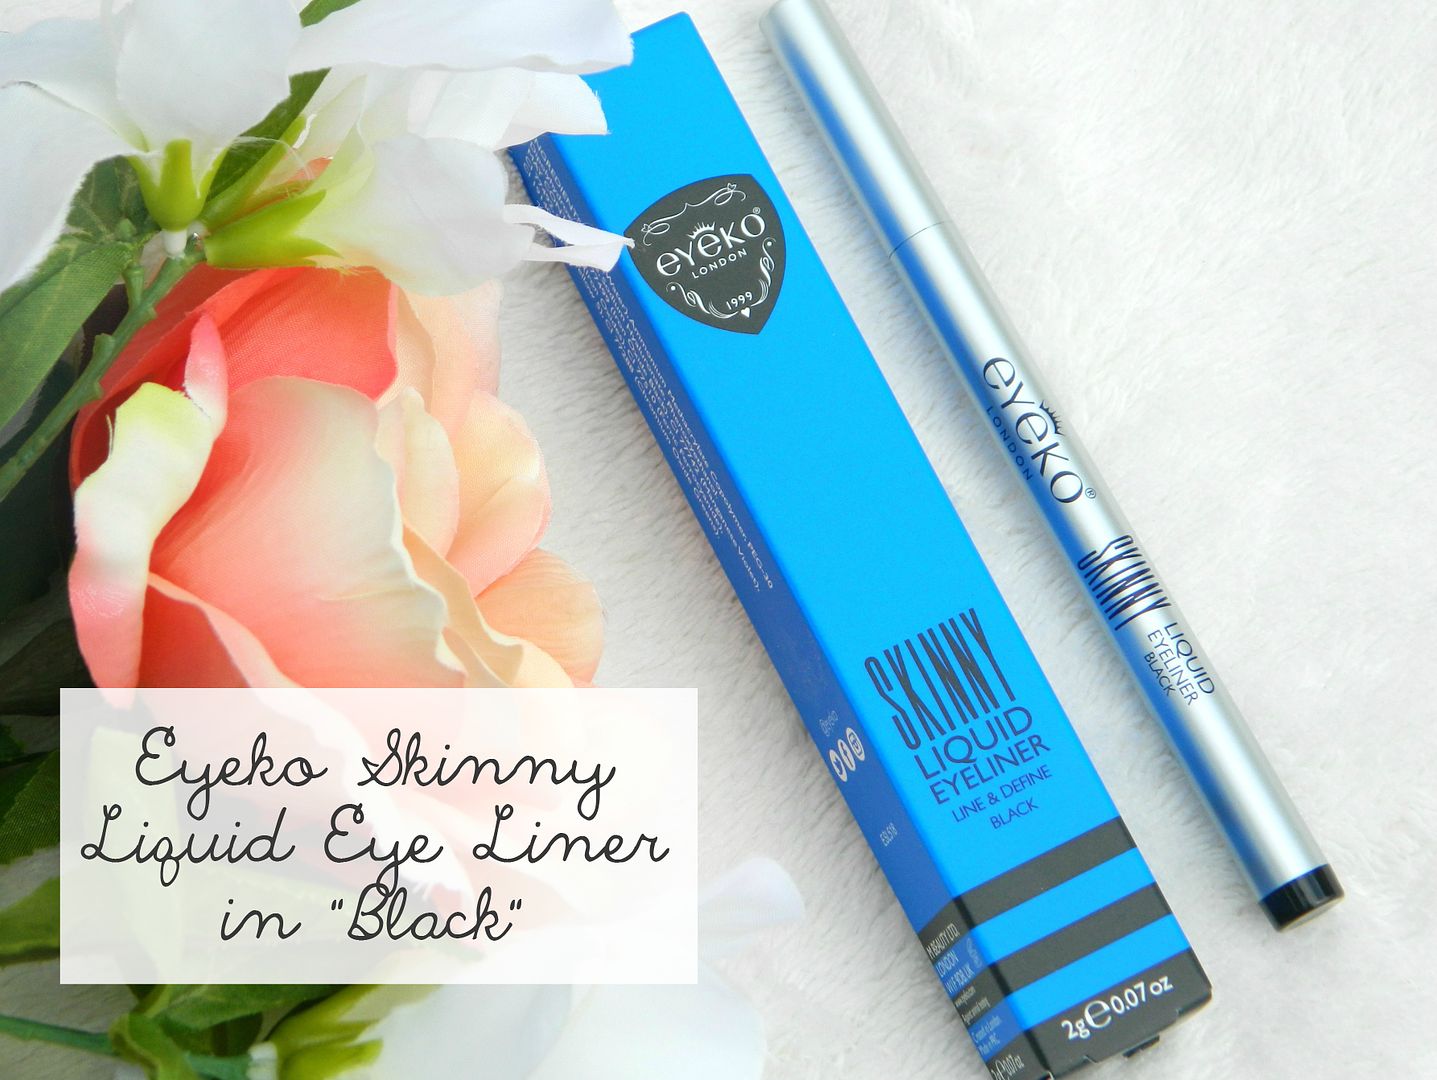 Eyeko Skinny Liquid Eye Liner in Black Review Swatch Belle-amie UK Beauty Fashion Lifestyle Blog